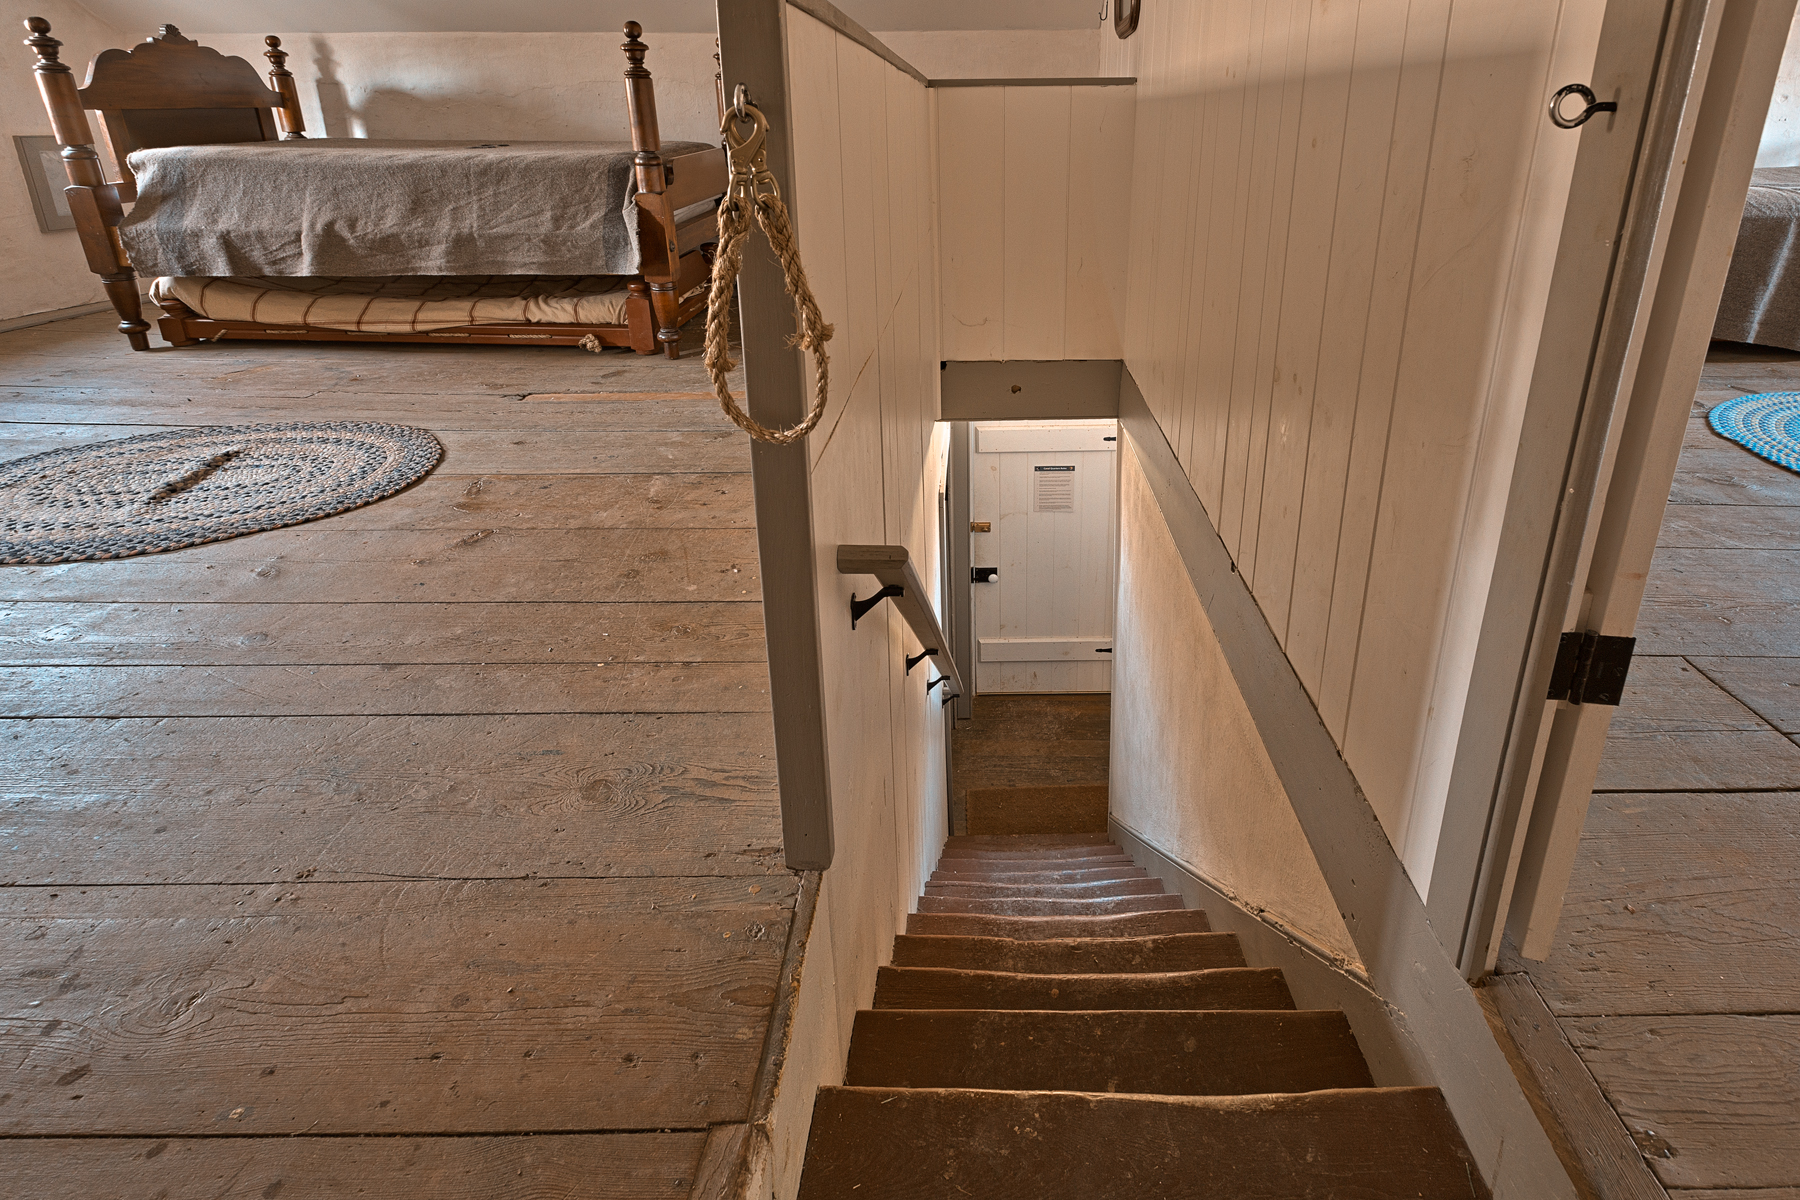 Lockhouse staircase & sleeping quarters photo